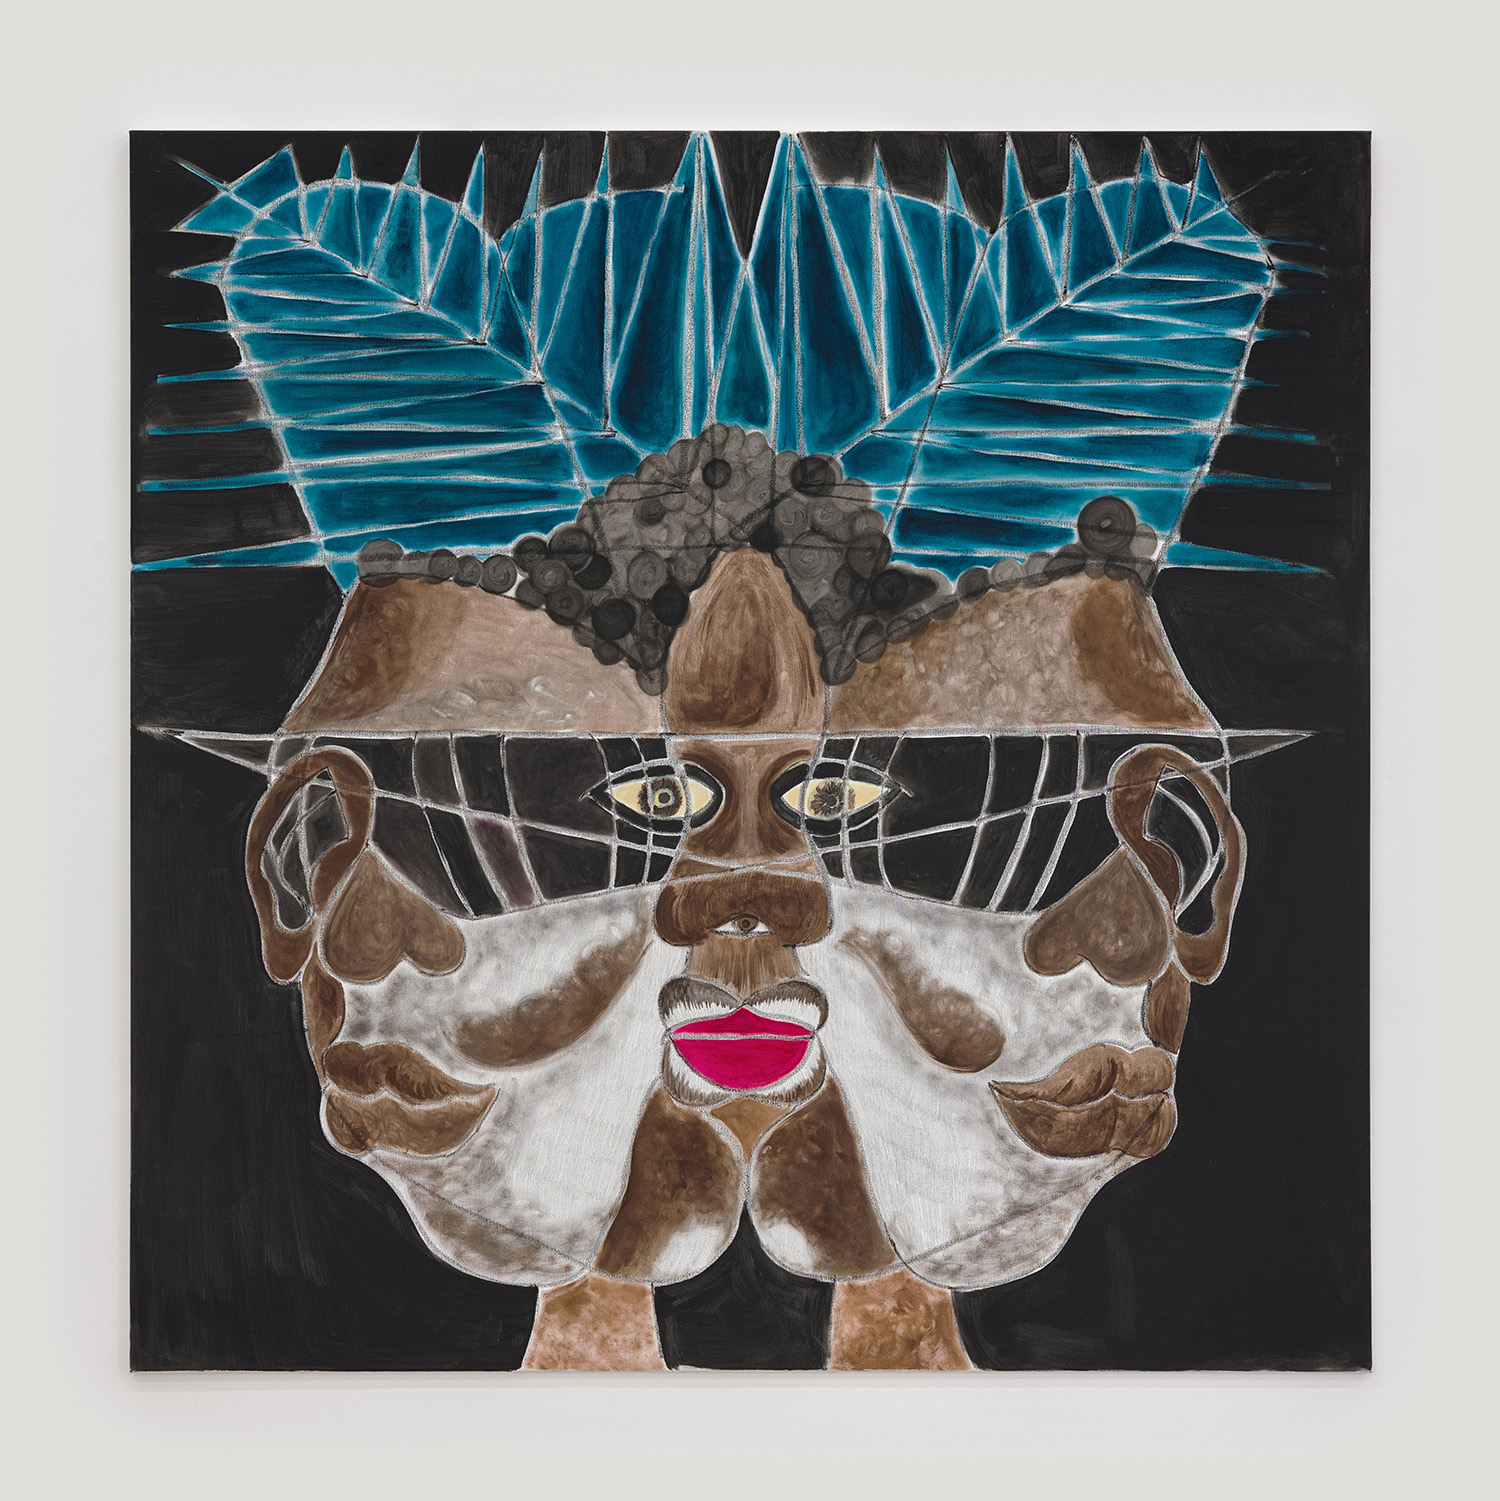 Nicholas Grafia, Three Faces A Day, 2021, acrylic and graphite on canvas, 160 x 160 cm, 63 x 63 in​